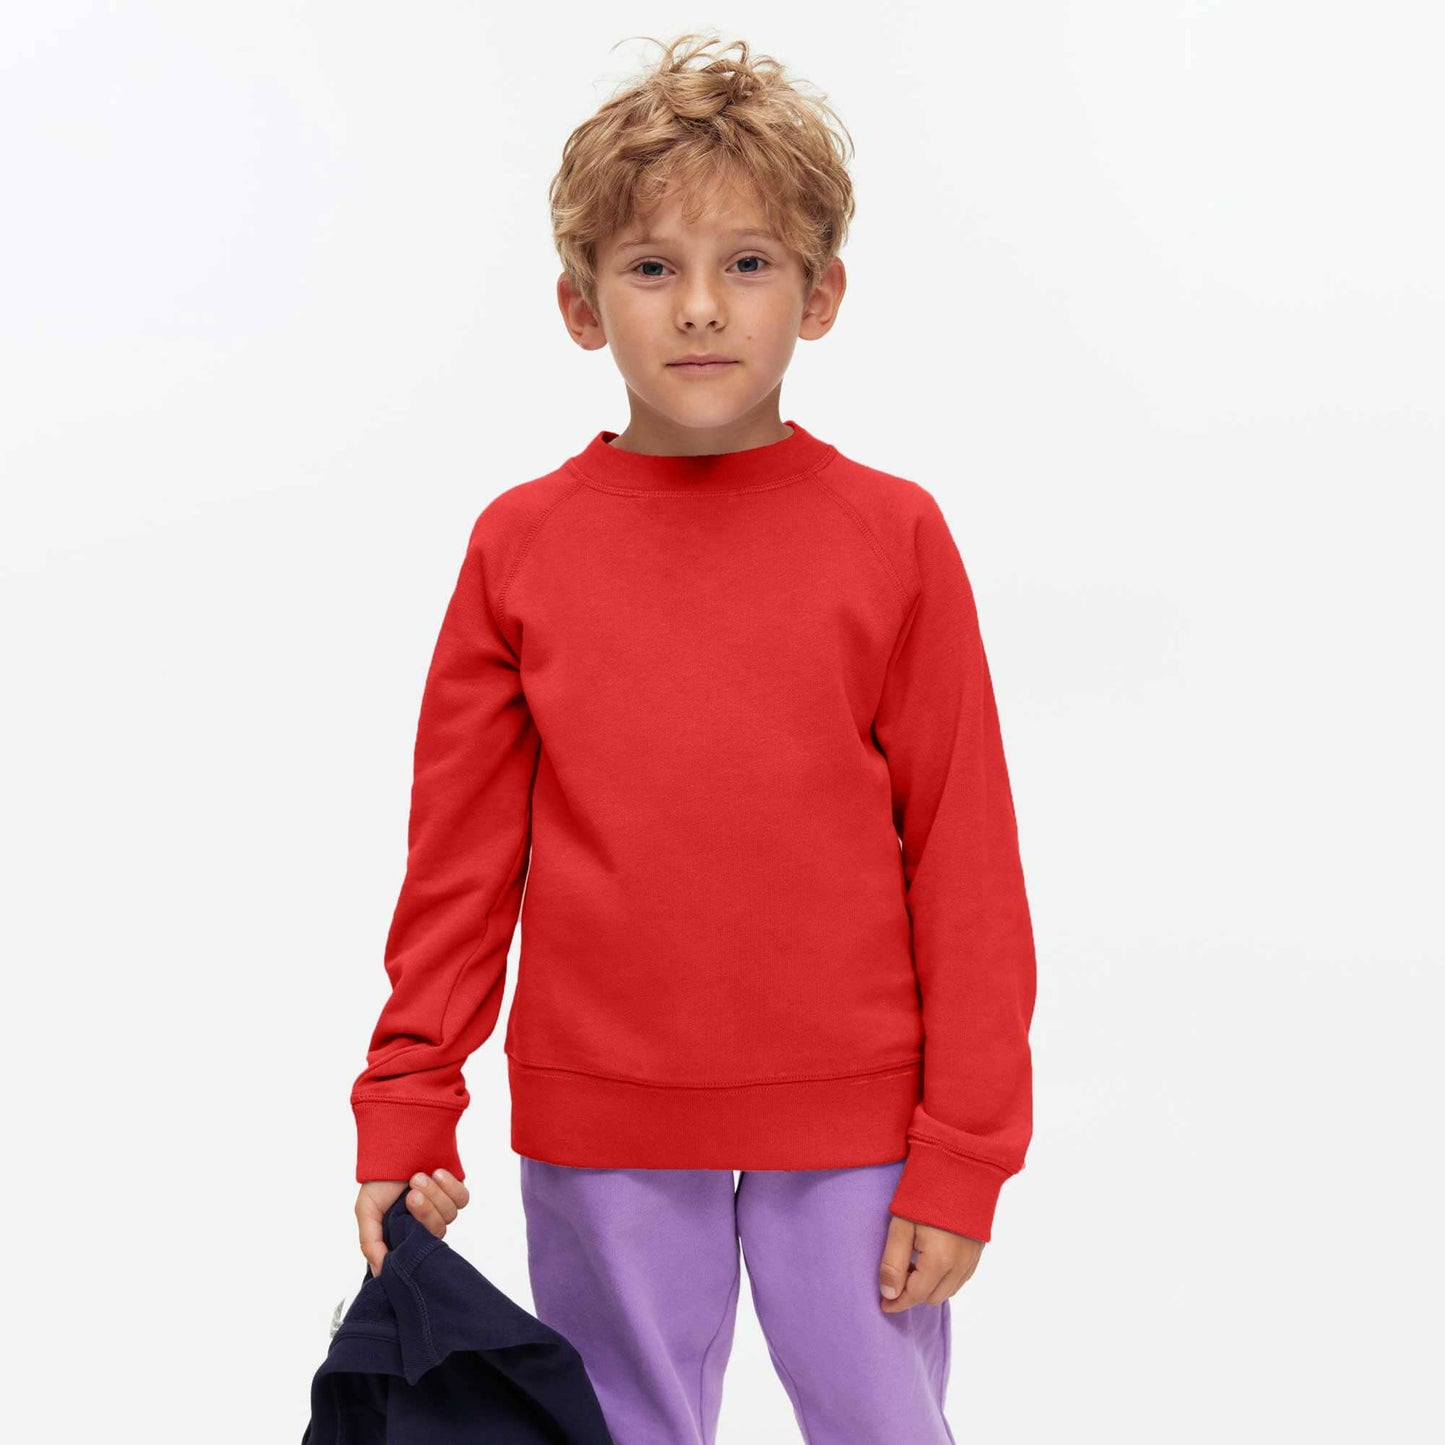 Sportex Kid's Solid Design Raglan Sleeve Fleece Sweat Shirt Kid's Sweat Shirt Minhas Garments Red 3-4 Years 